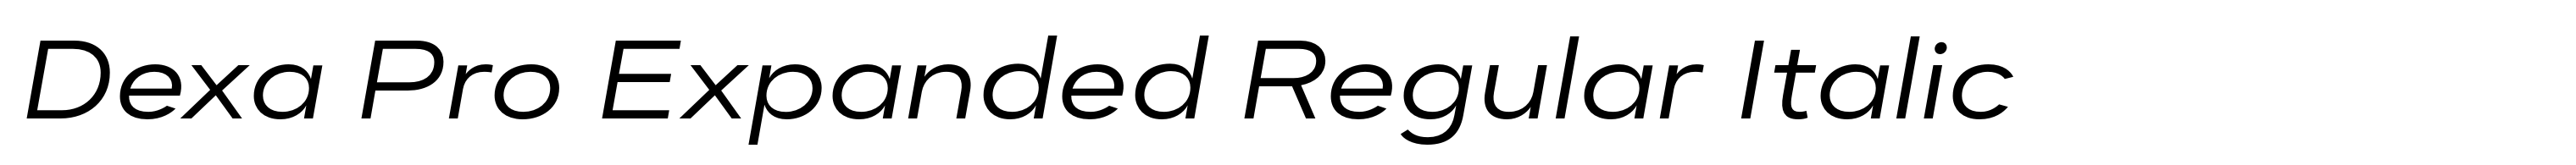 Dexa Pro Expanded Regular Italic